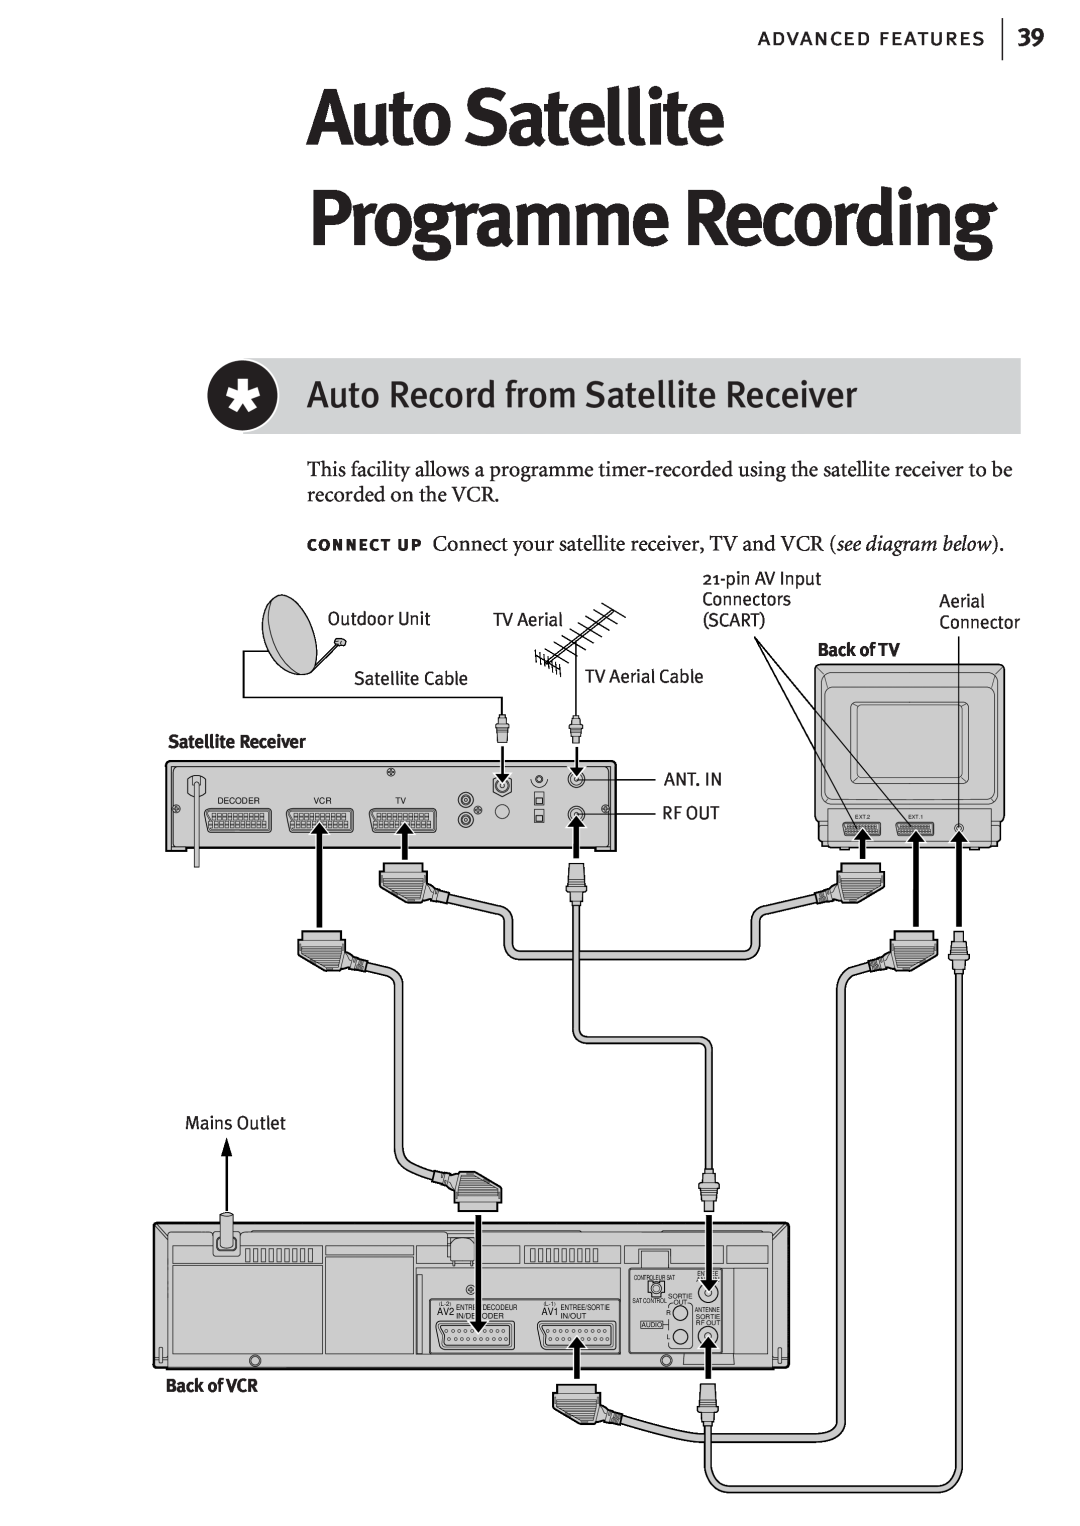 JVC HR-J680EK, HR-J682EK manual Auto Satellite, Auto Record from Satellite Receiver, Programme Recording, advanced features 